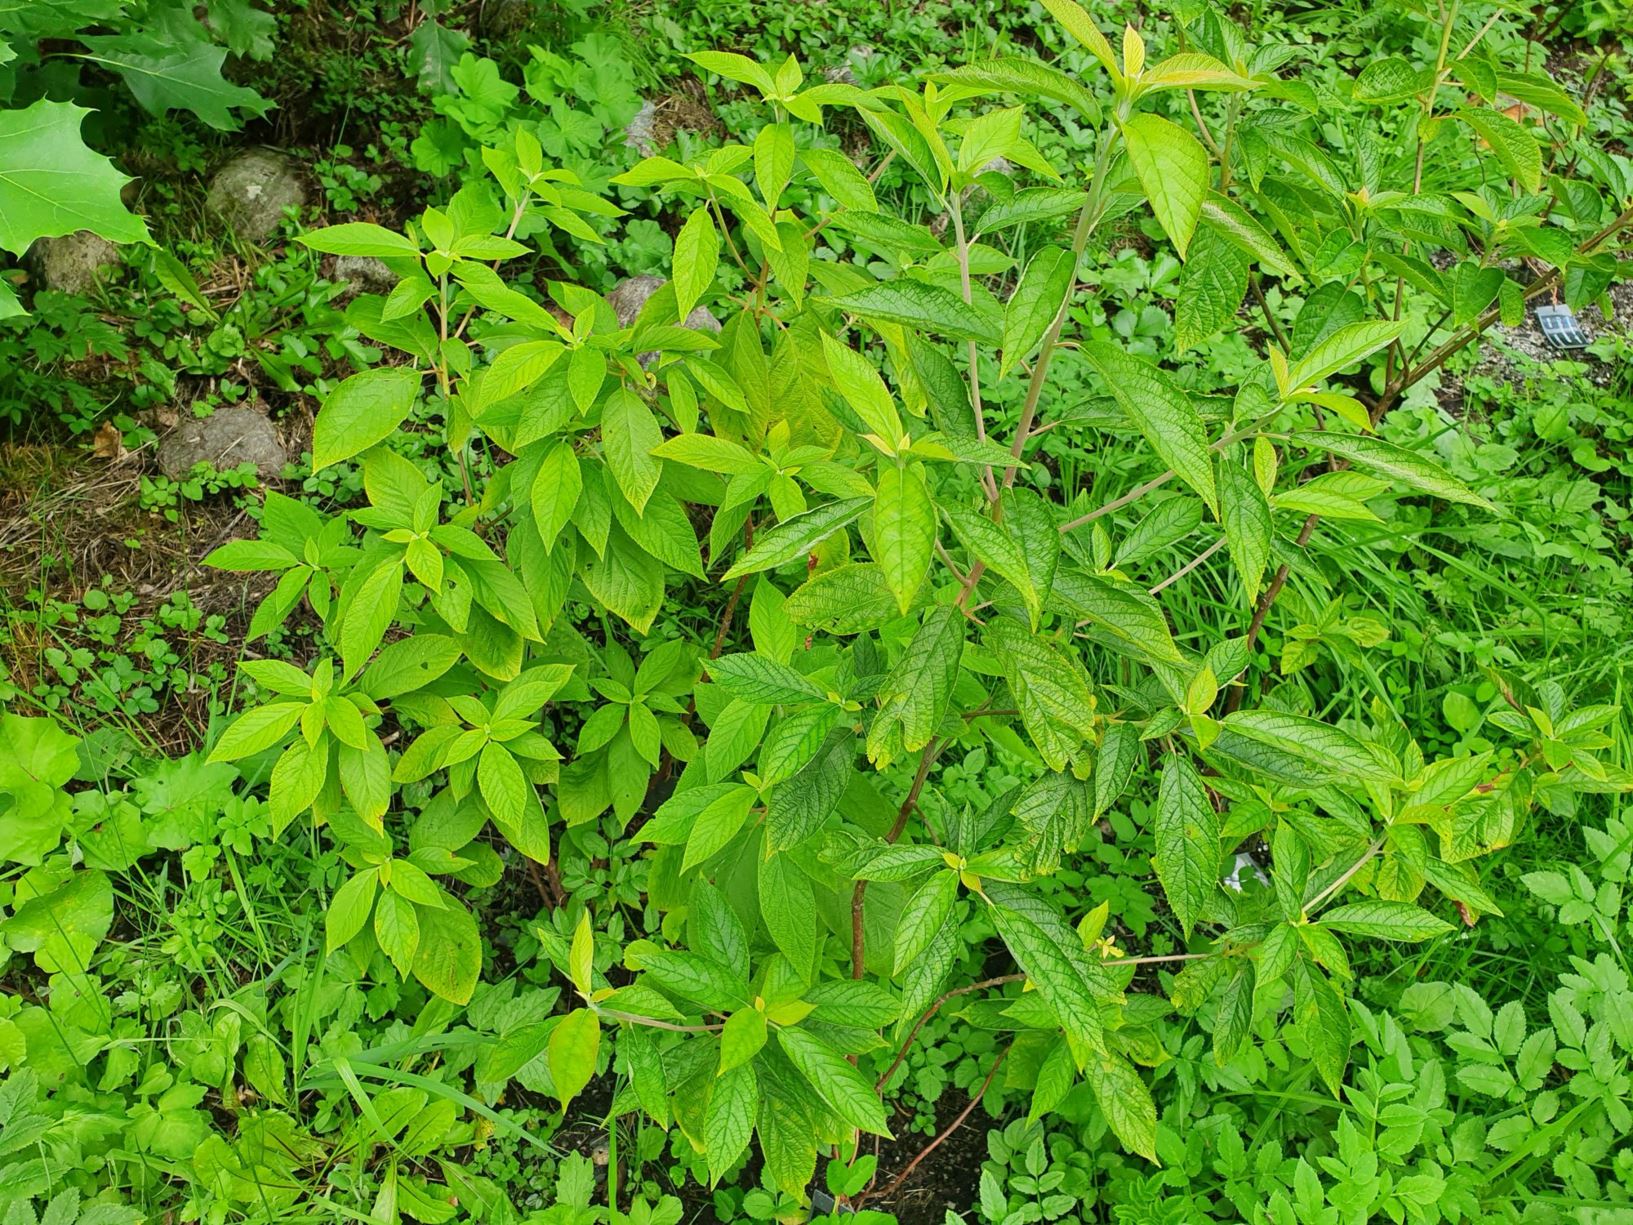 Clethra acuminata